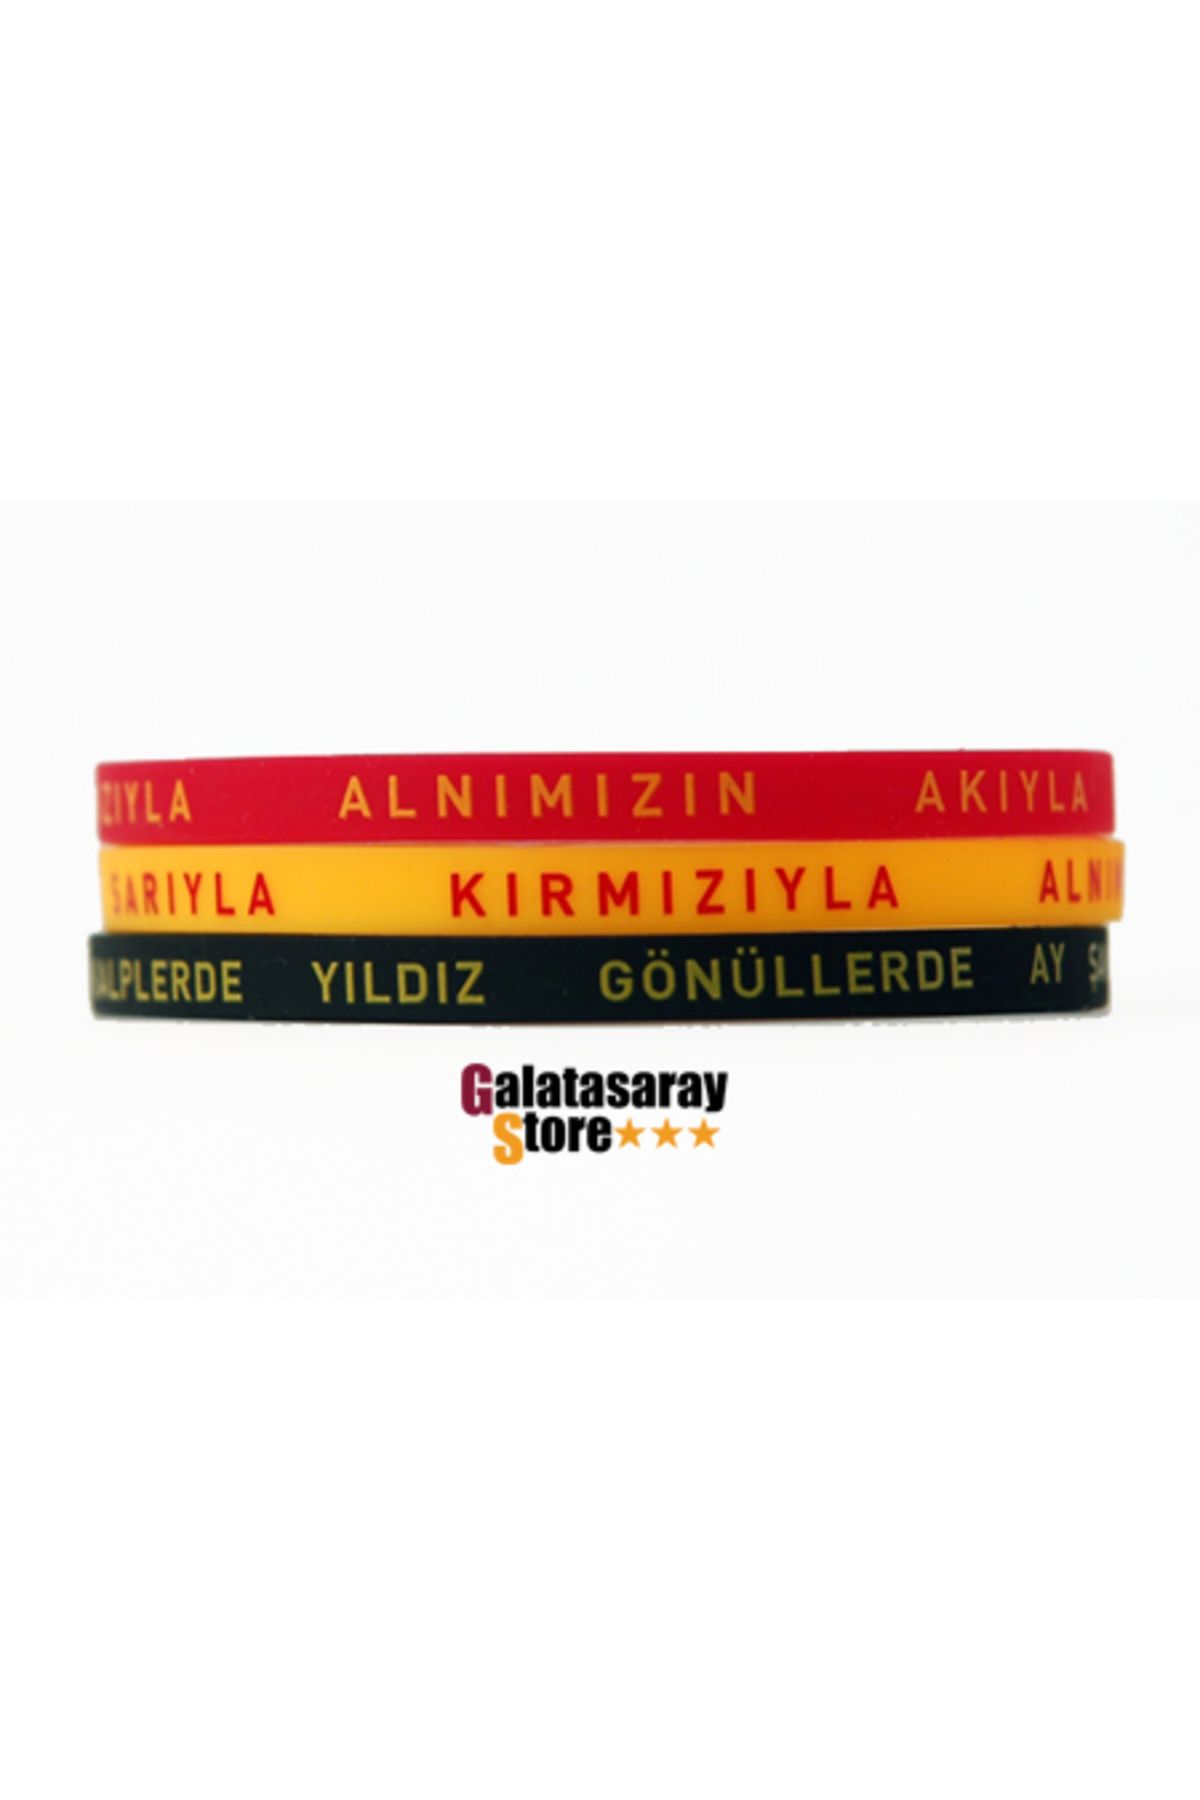 Galatasaray Ince Galatasaray Bileklik 9837 As U02059